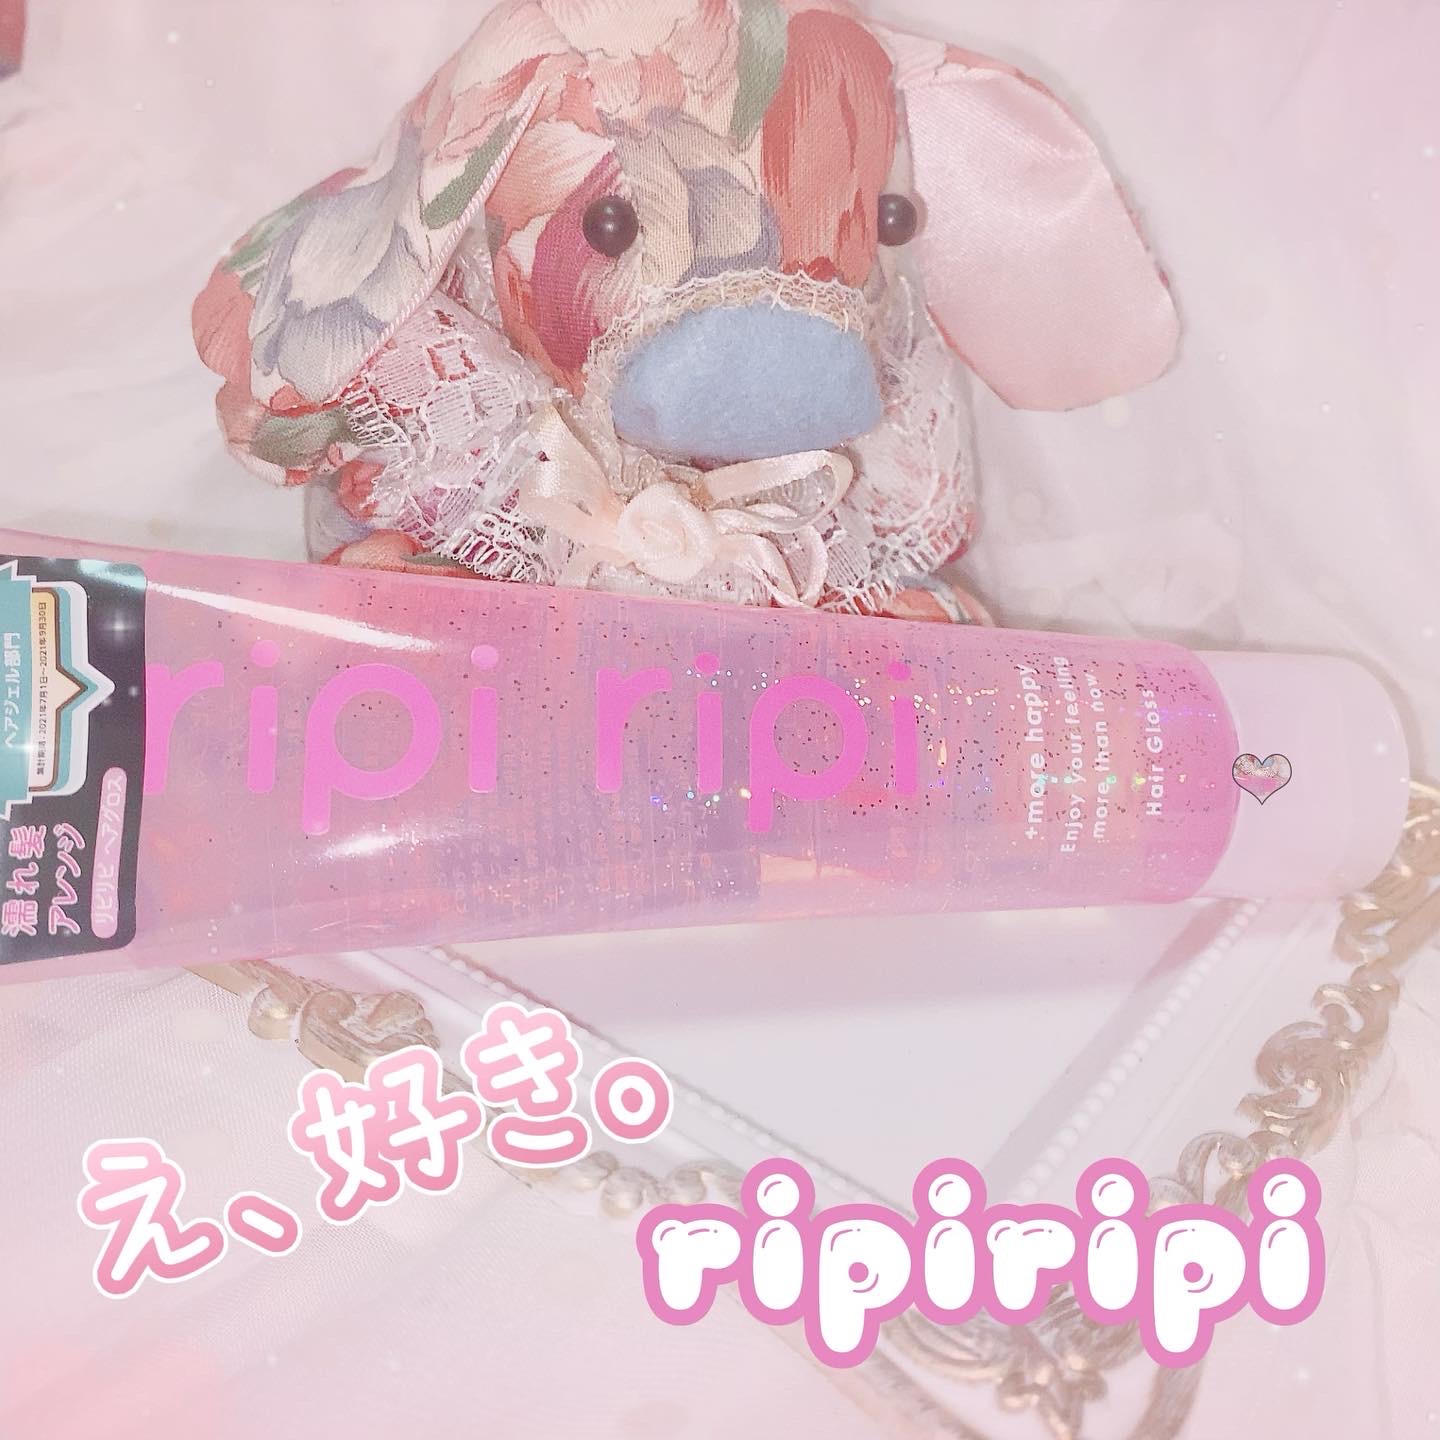 ripi ripi(リピリピ) ヘアグロスの良い点・メリットに関する珈琲豆♡さんの口コミ画像1